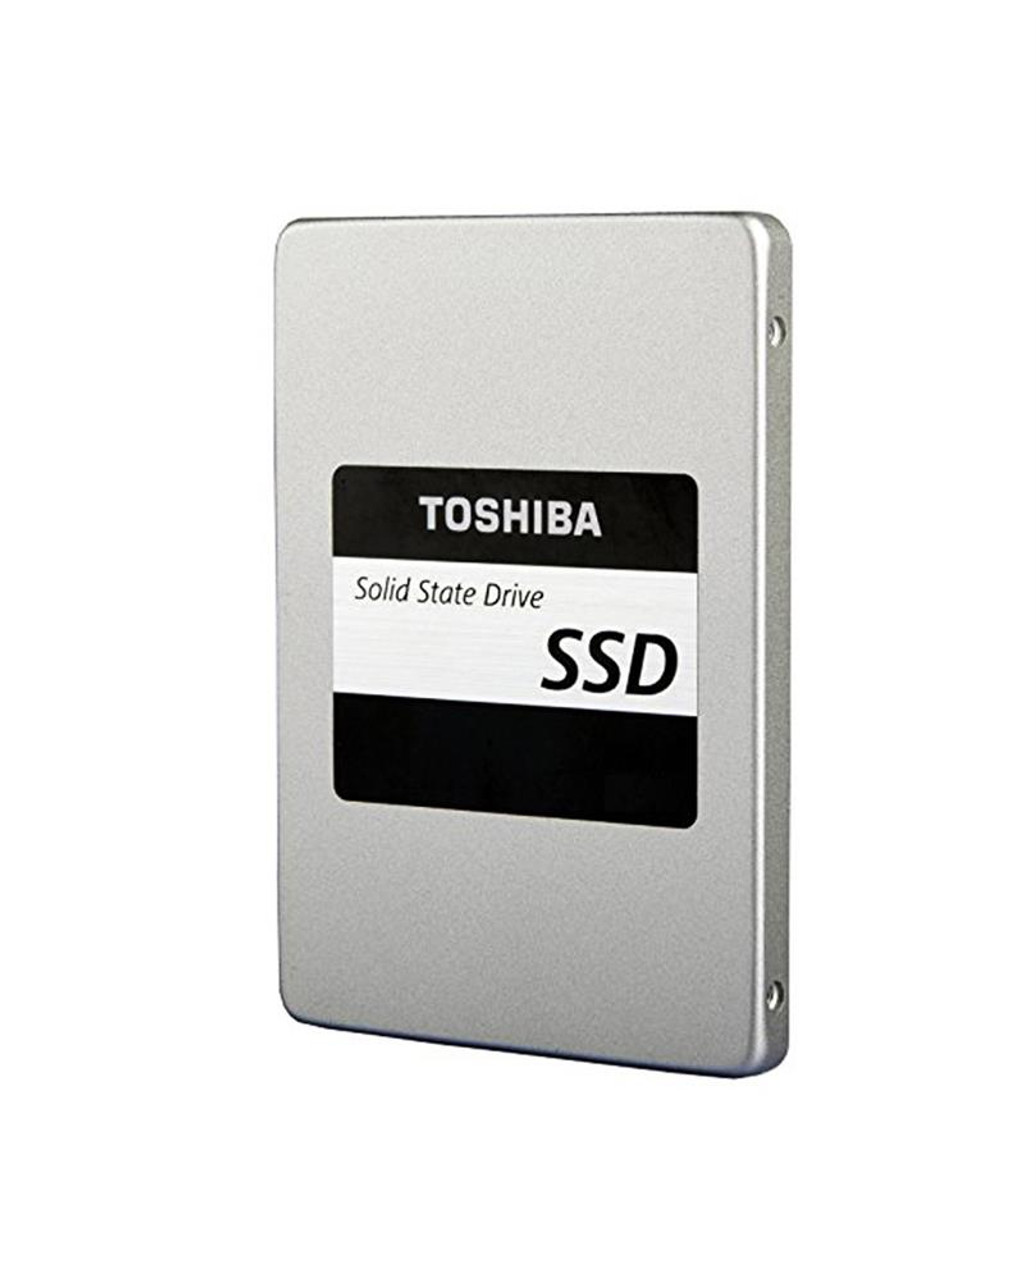 HDTS724XZSTA Toshiba Q300 240GB TLC SATA 6Gbps 2.5-inch Internal Solid State Drive (SSD)